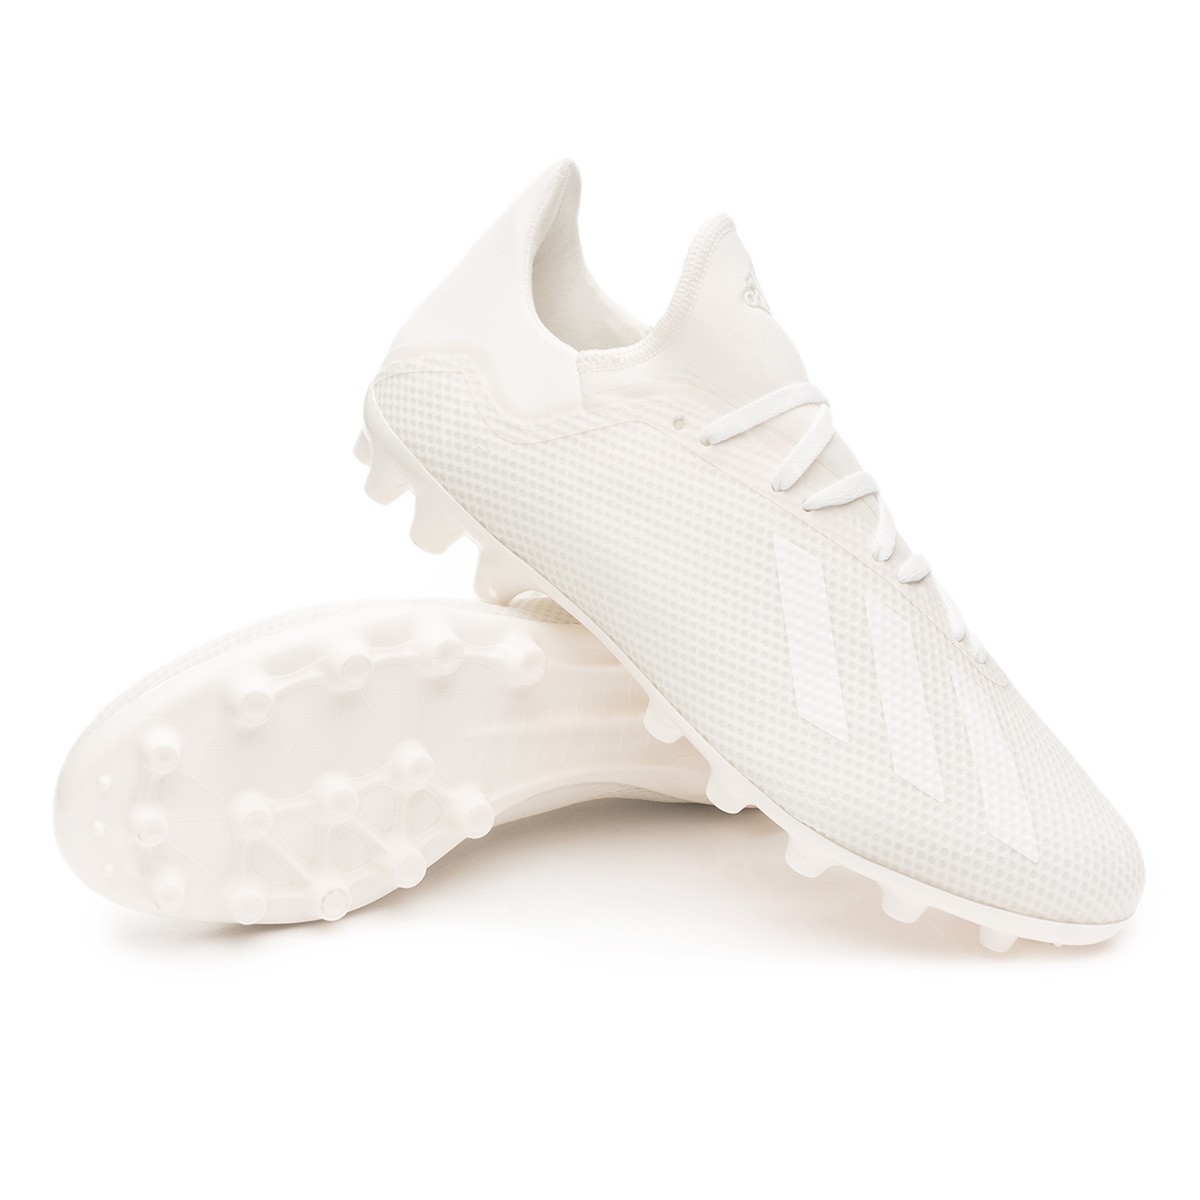 adidas x white football boots